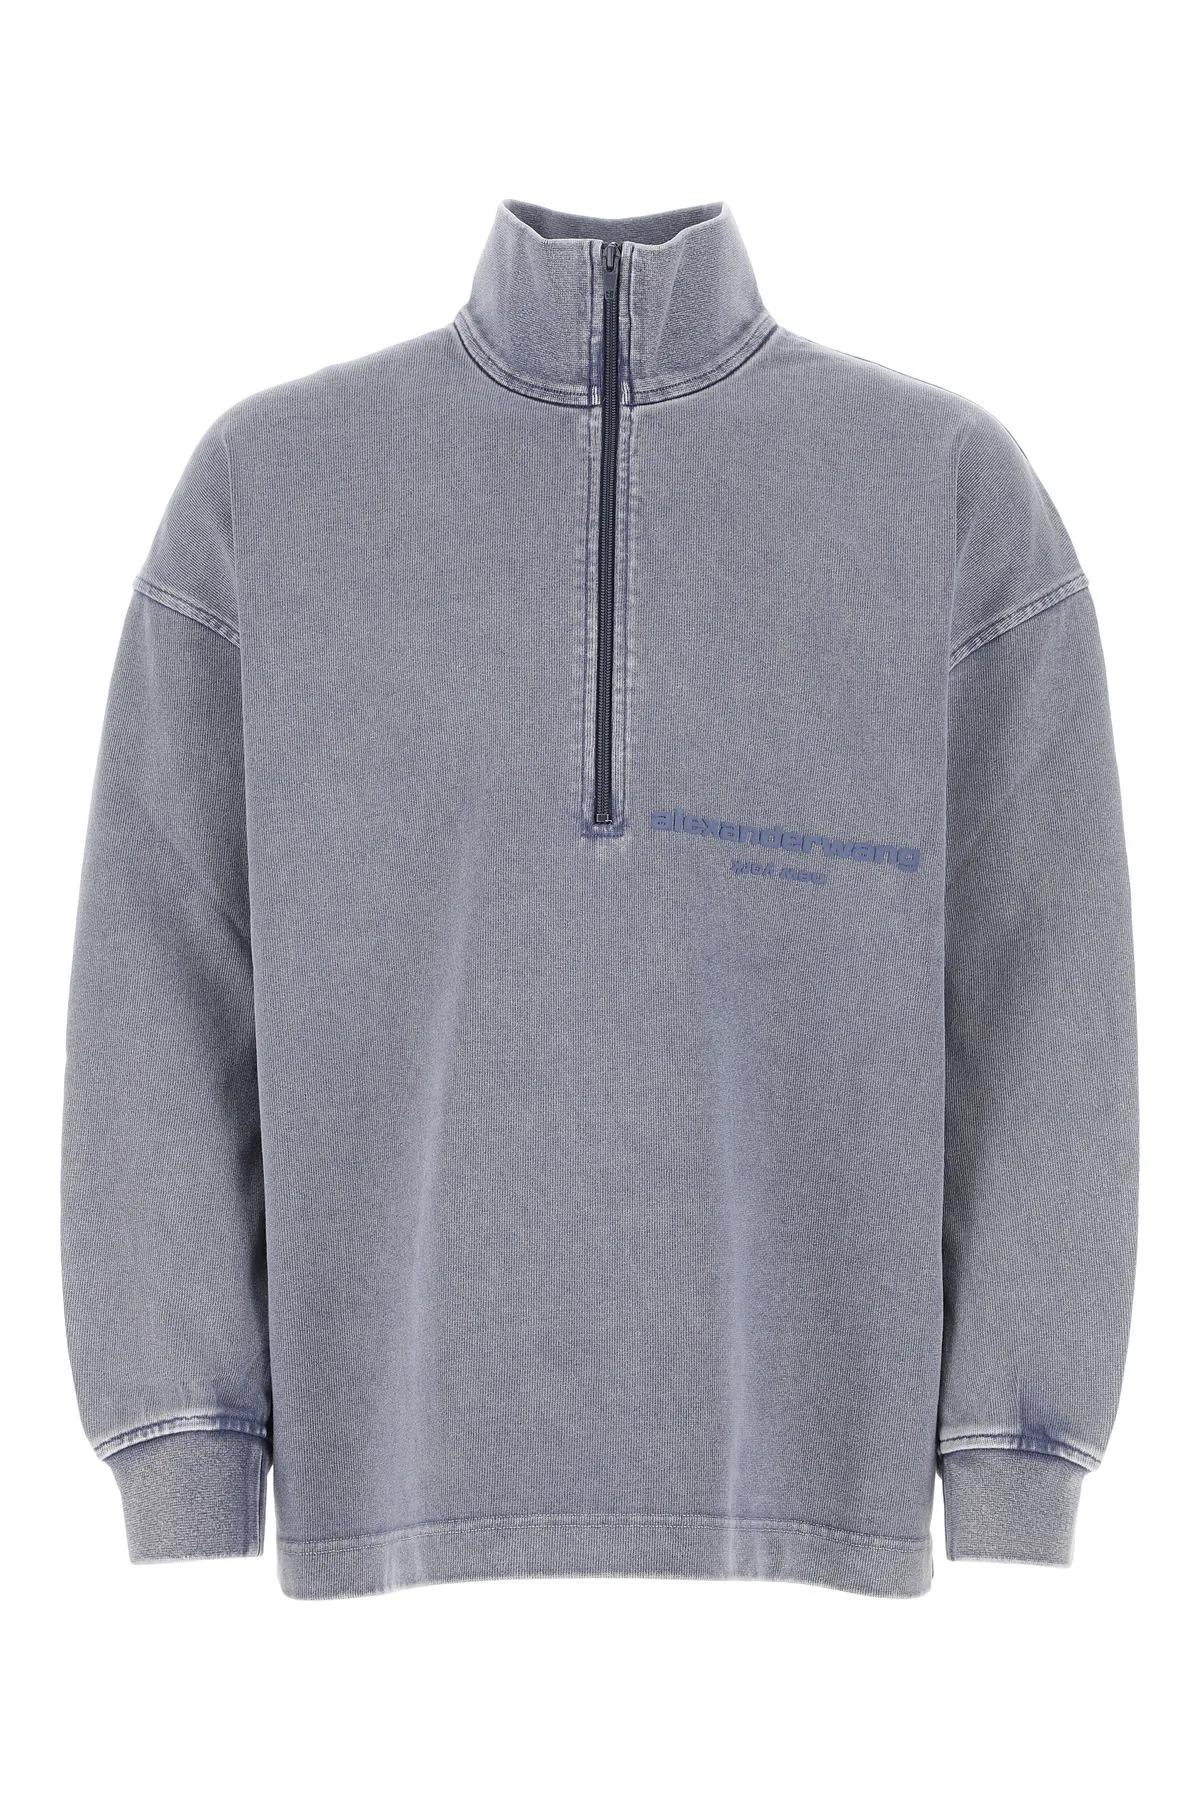 Alexander Wang Denim Blue Cotton Oversize Sweatshirt